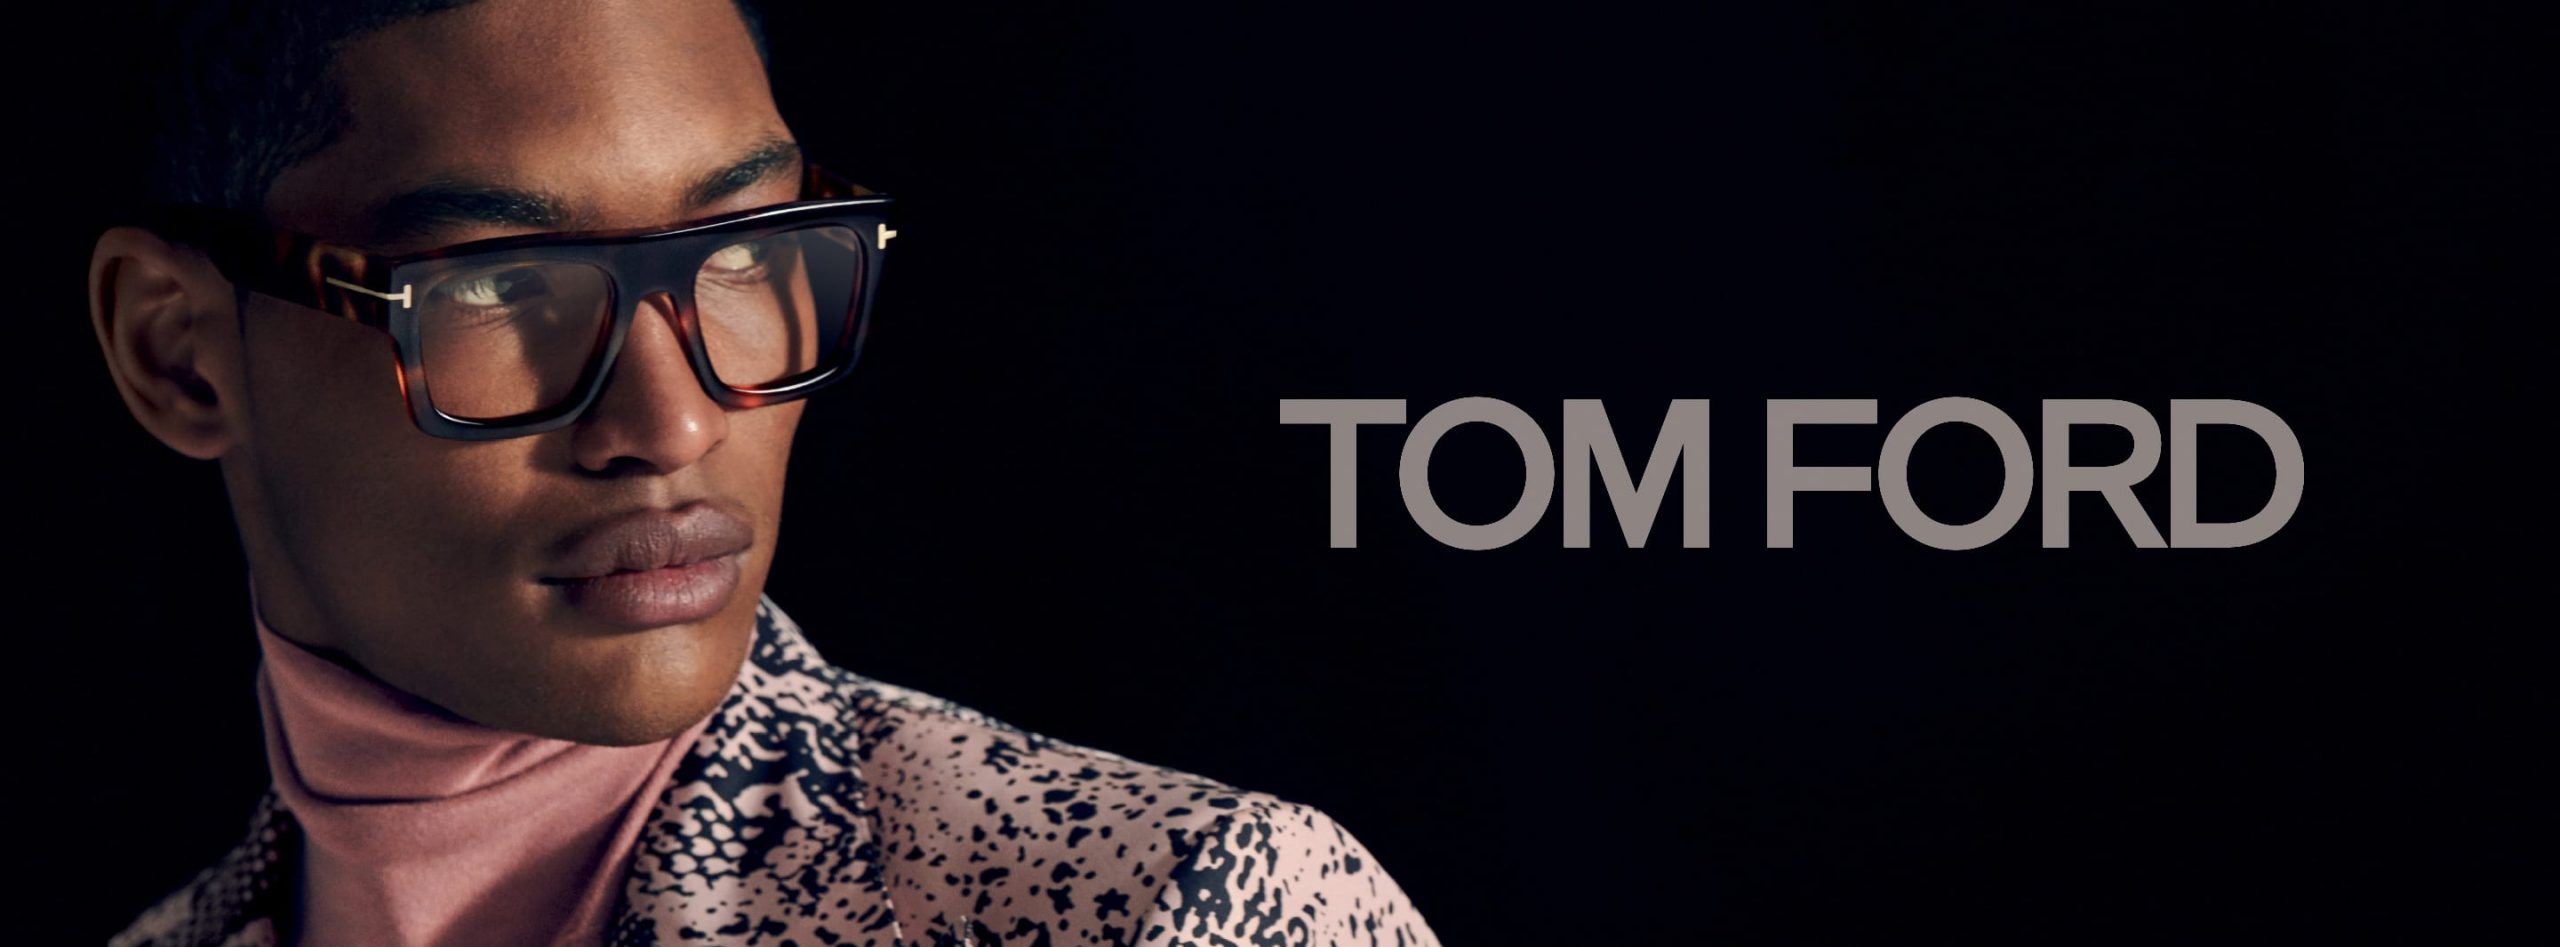 Tom Ford| Cohen's Fashion Optical